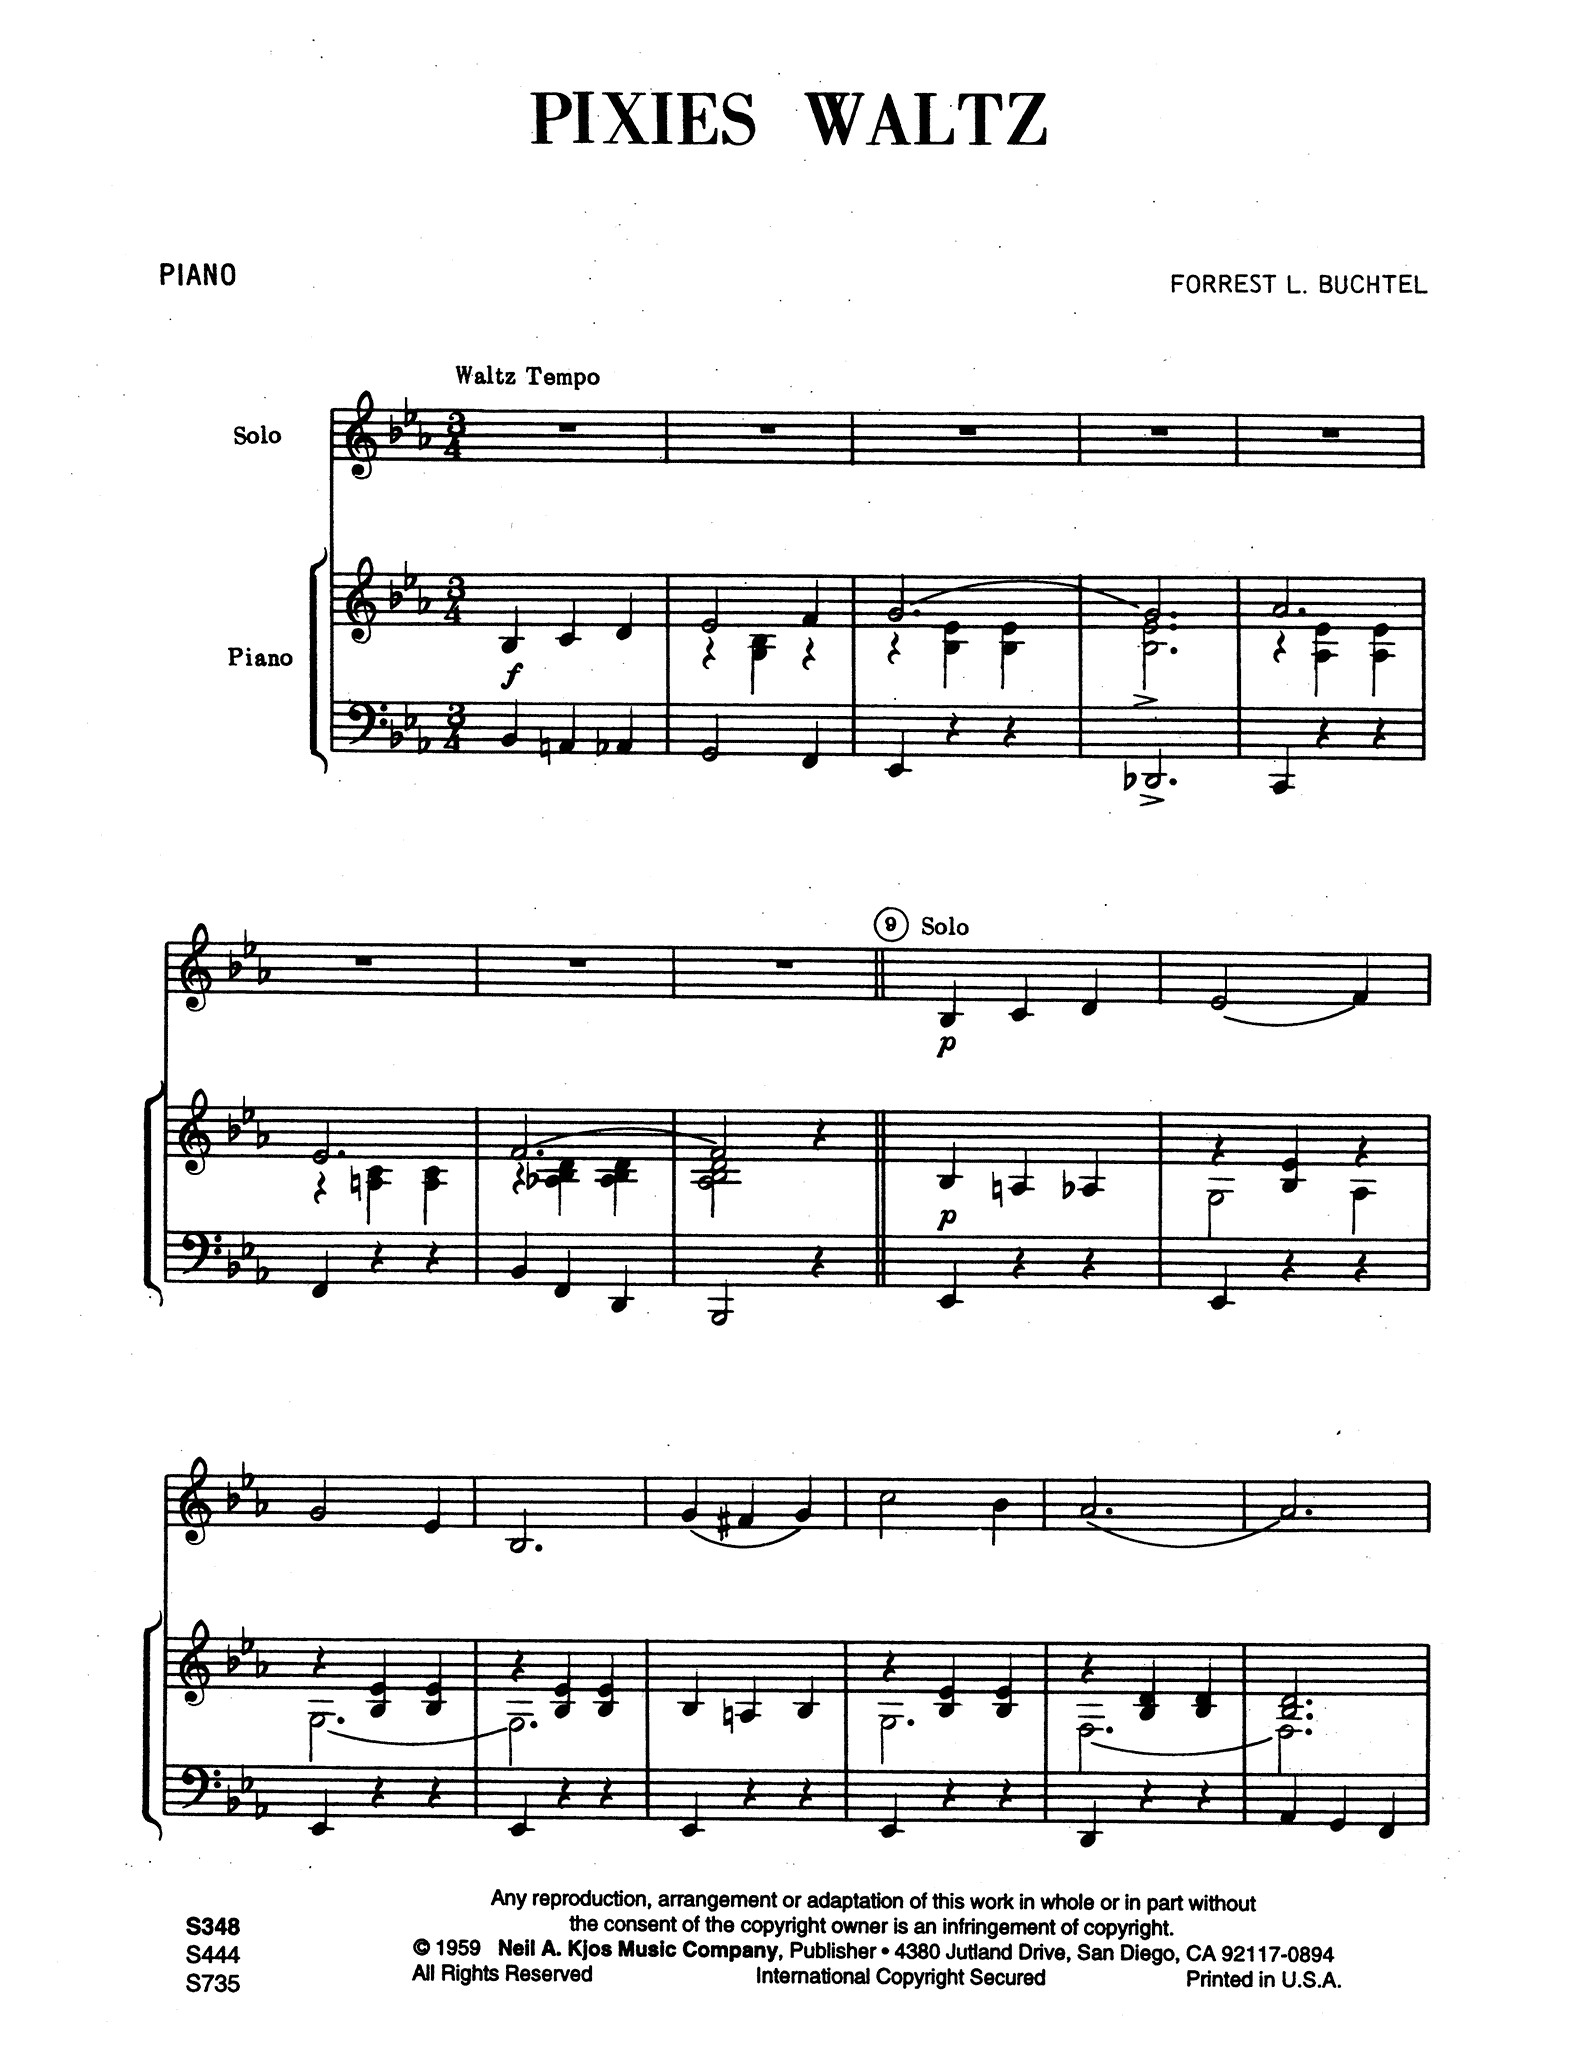 Buchtel Pixies Waltz clarinet and piano score